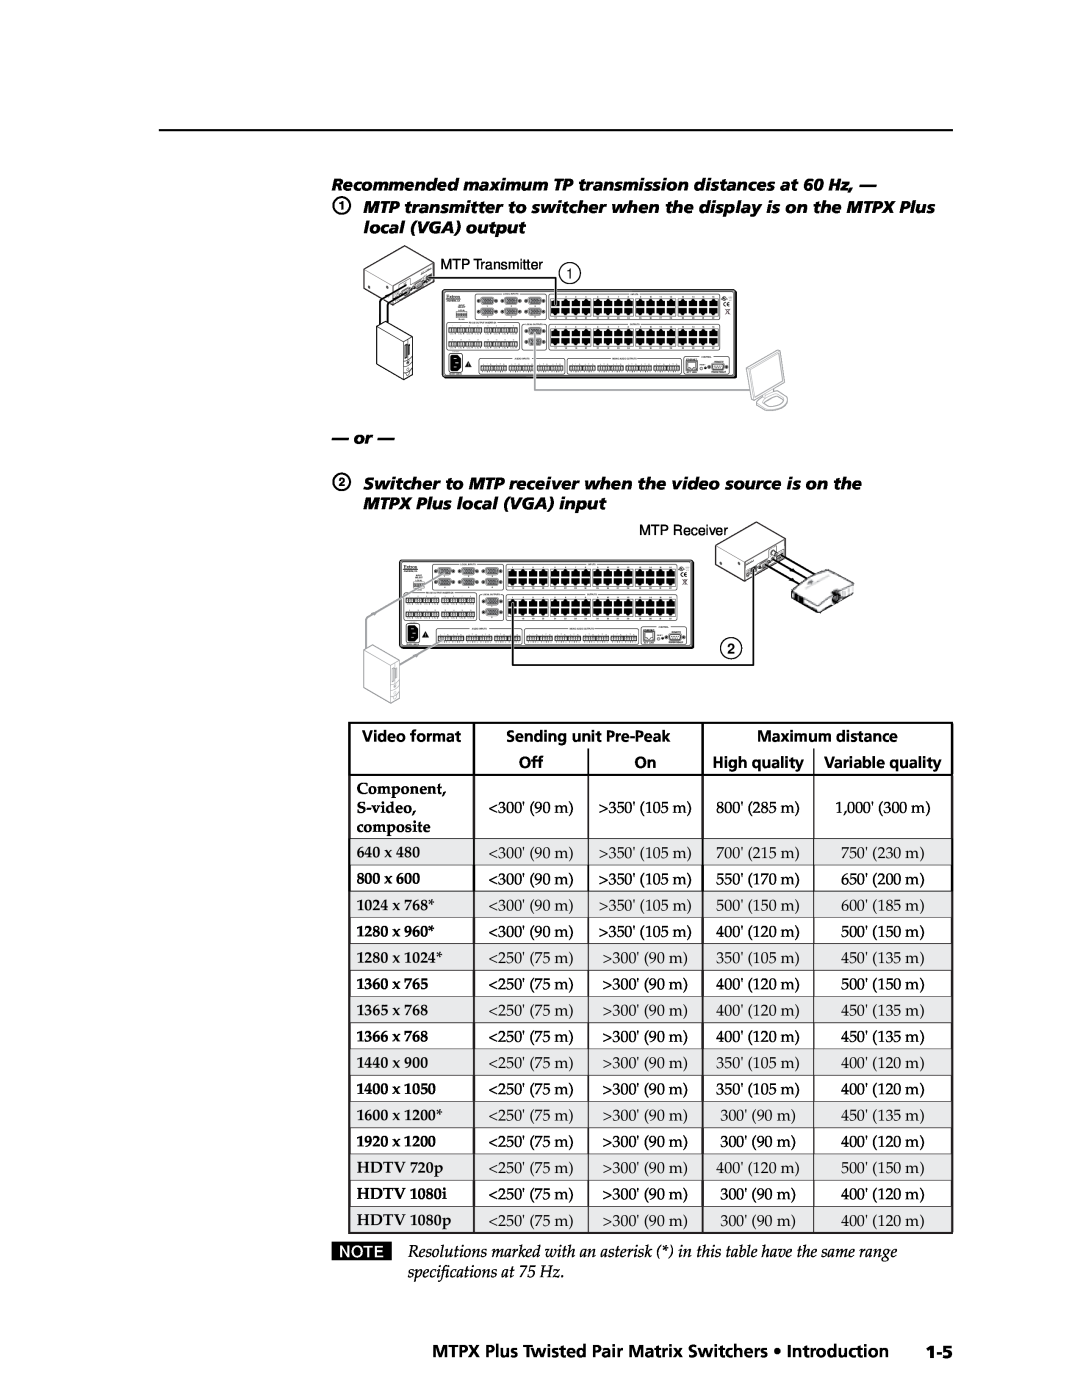 Extron electronic MTPX Plus Series manual Recommended maximum TP transmission distances at 60 Hz, Video format 